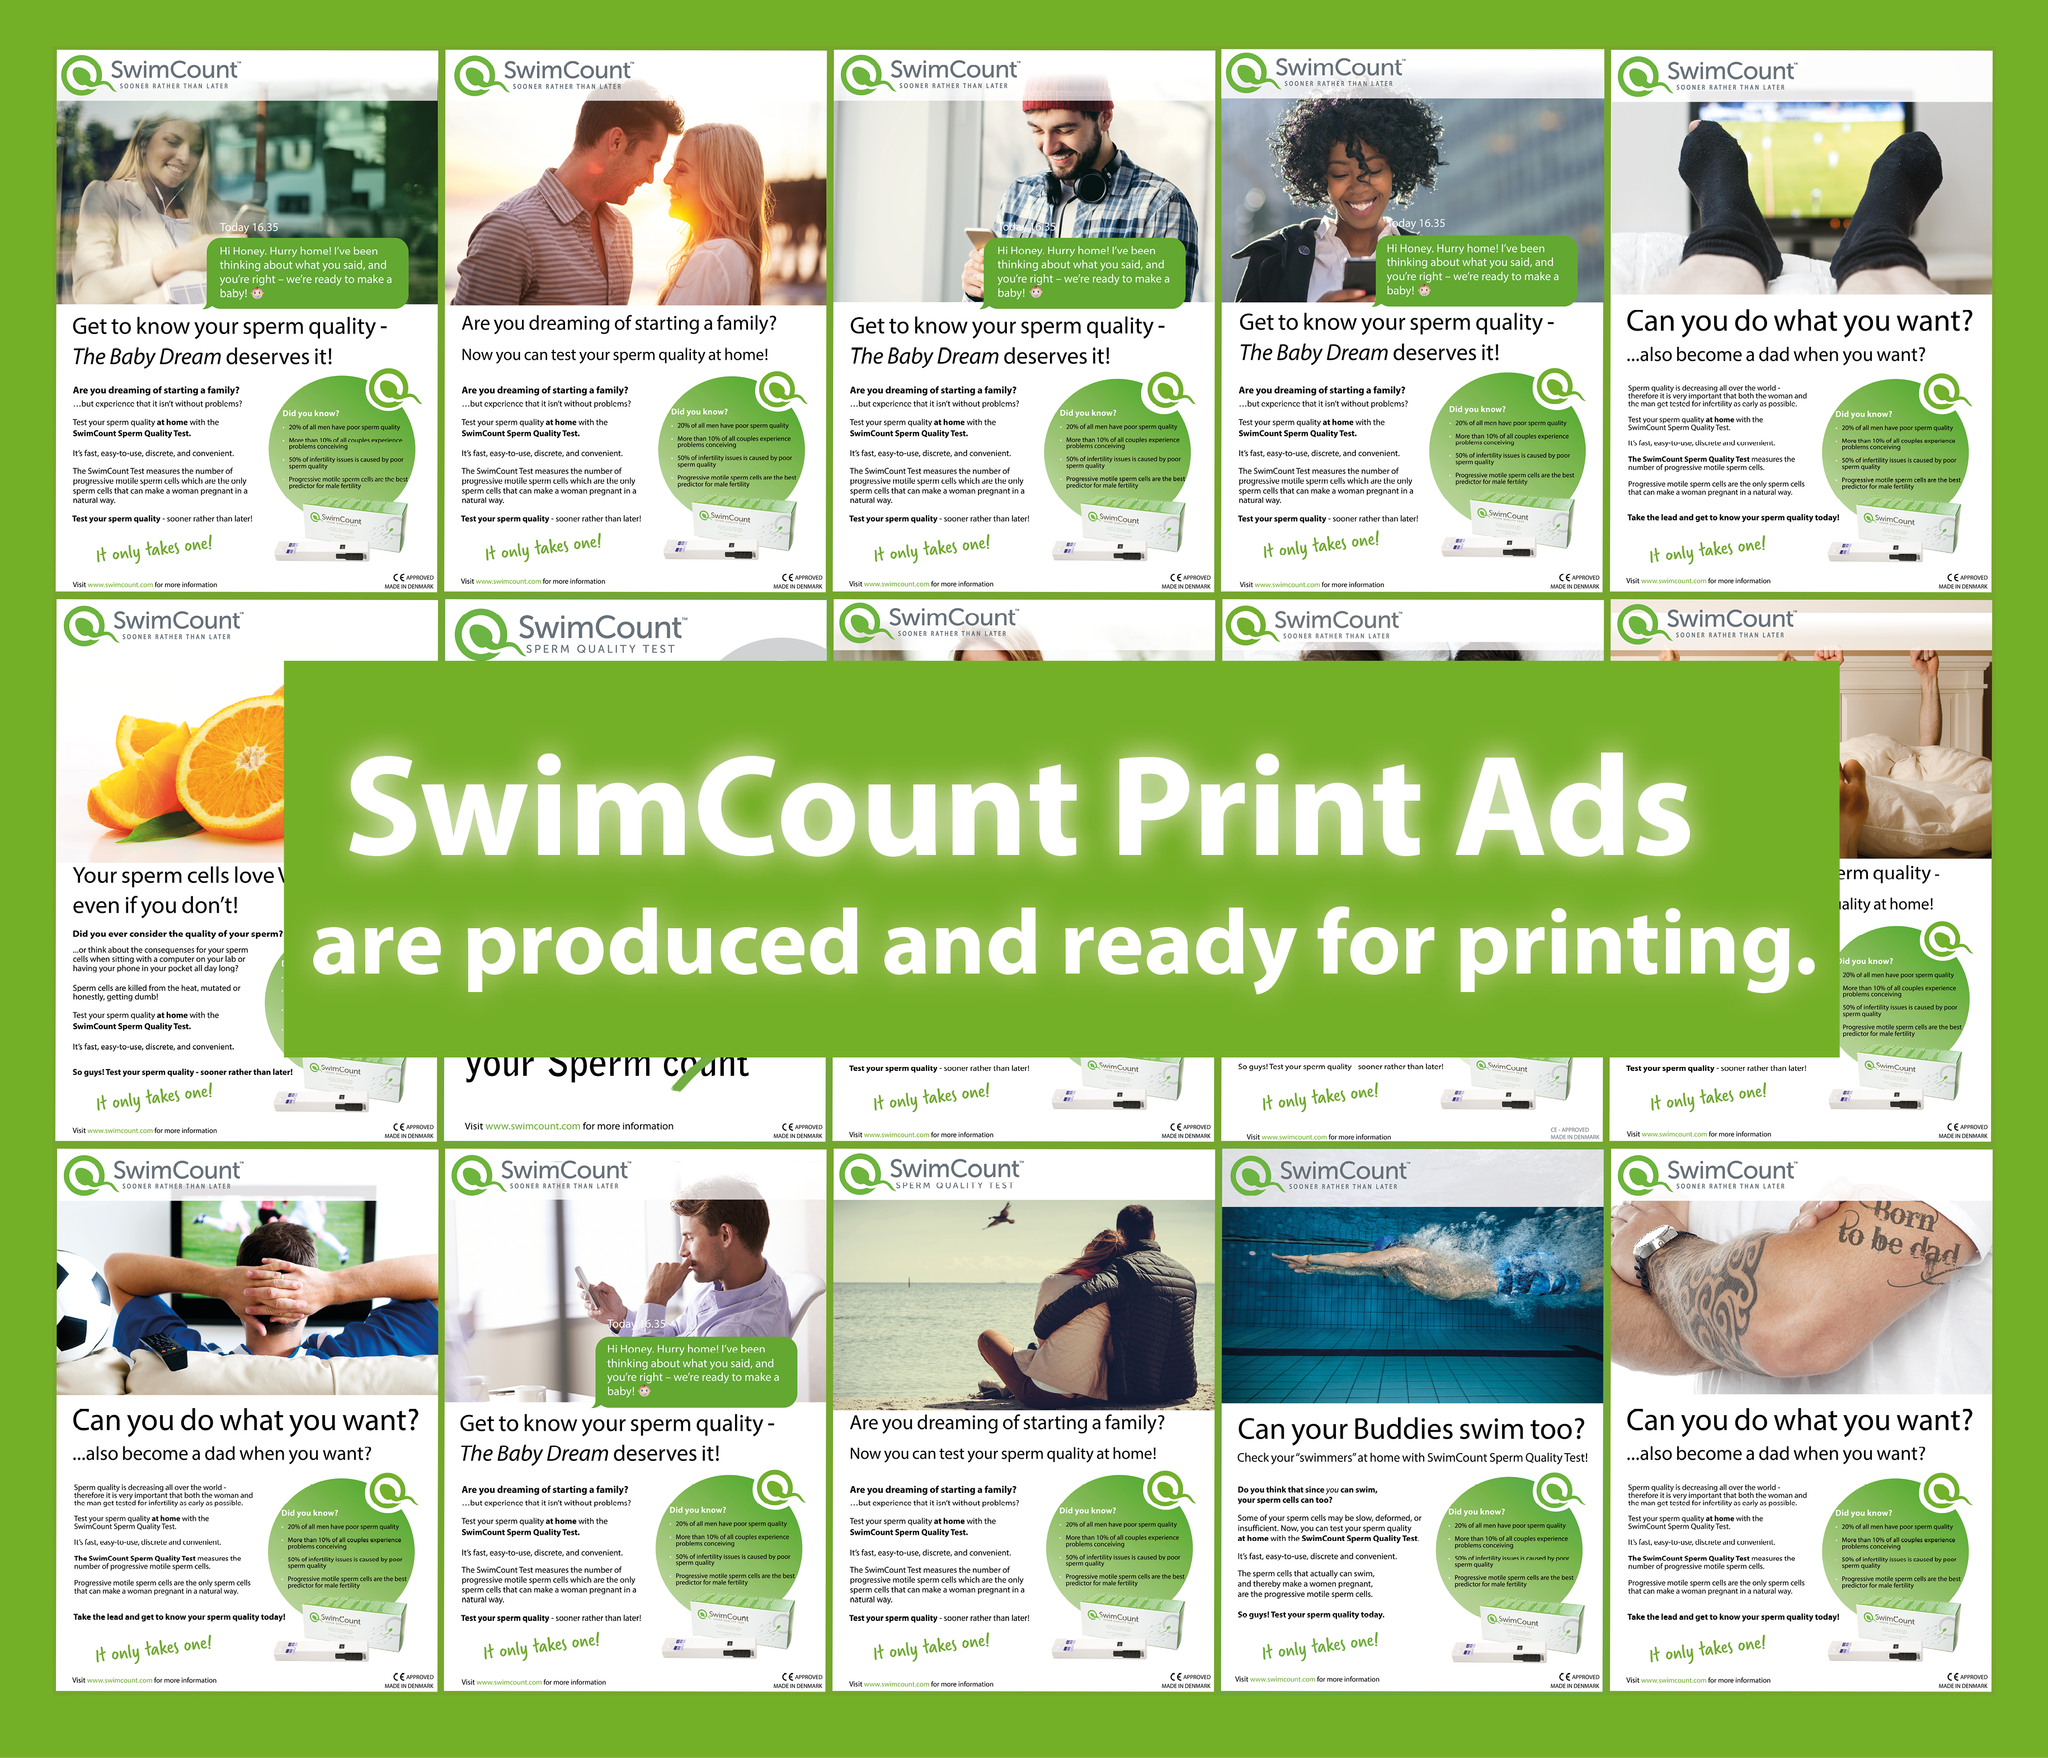 SwimCount's Print Ads